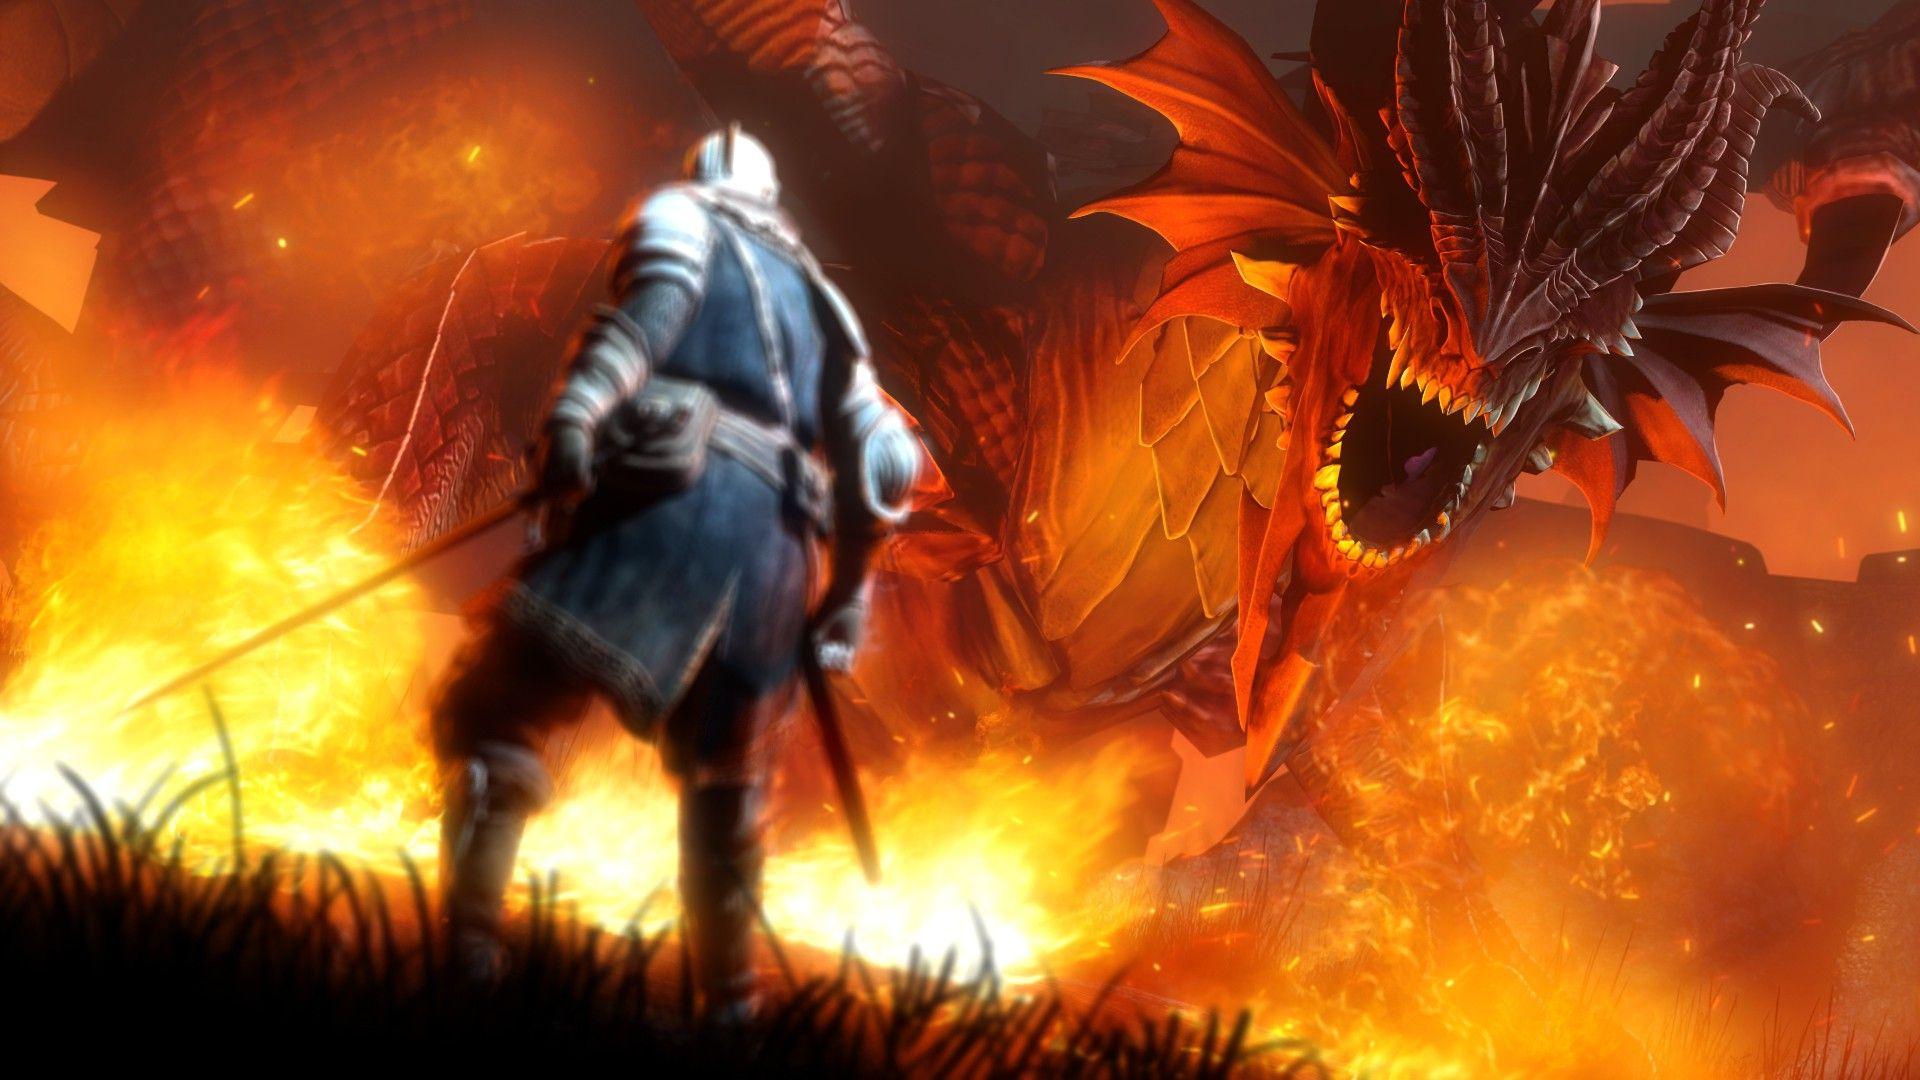 Full HD Of Games Dark Souls Fire Dragon Desktop And Wallpaper High